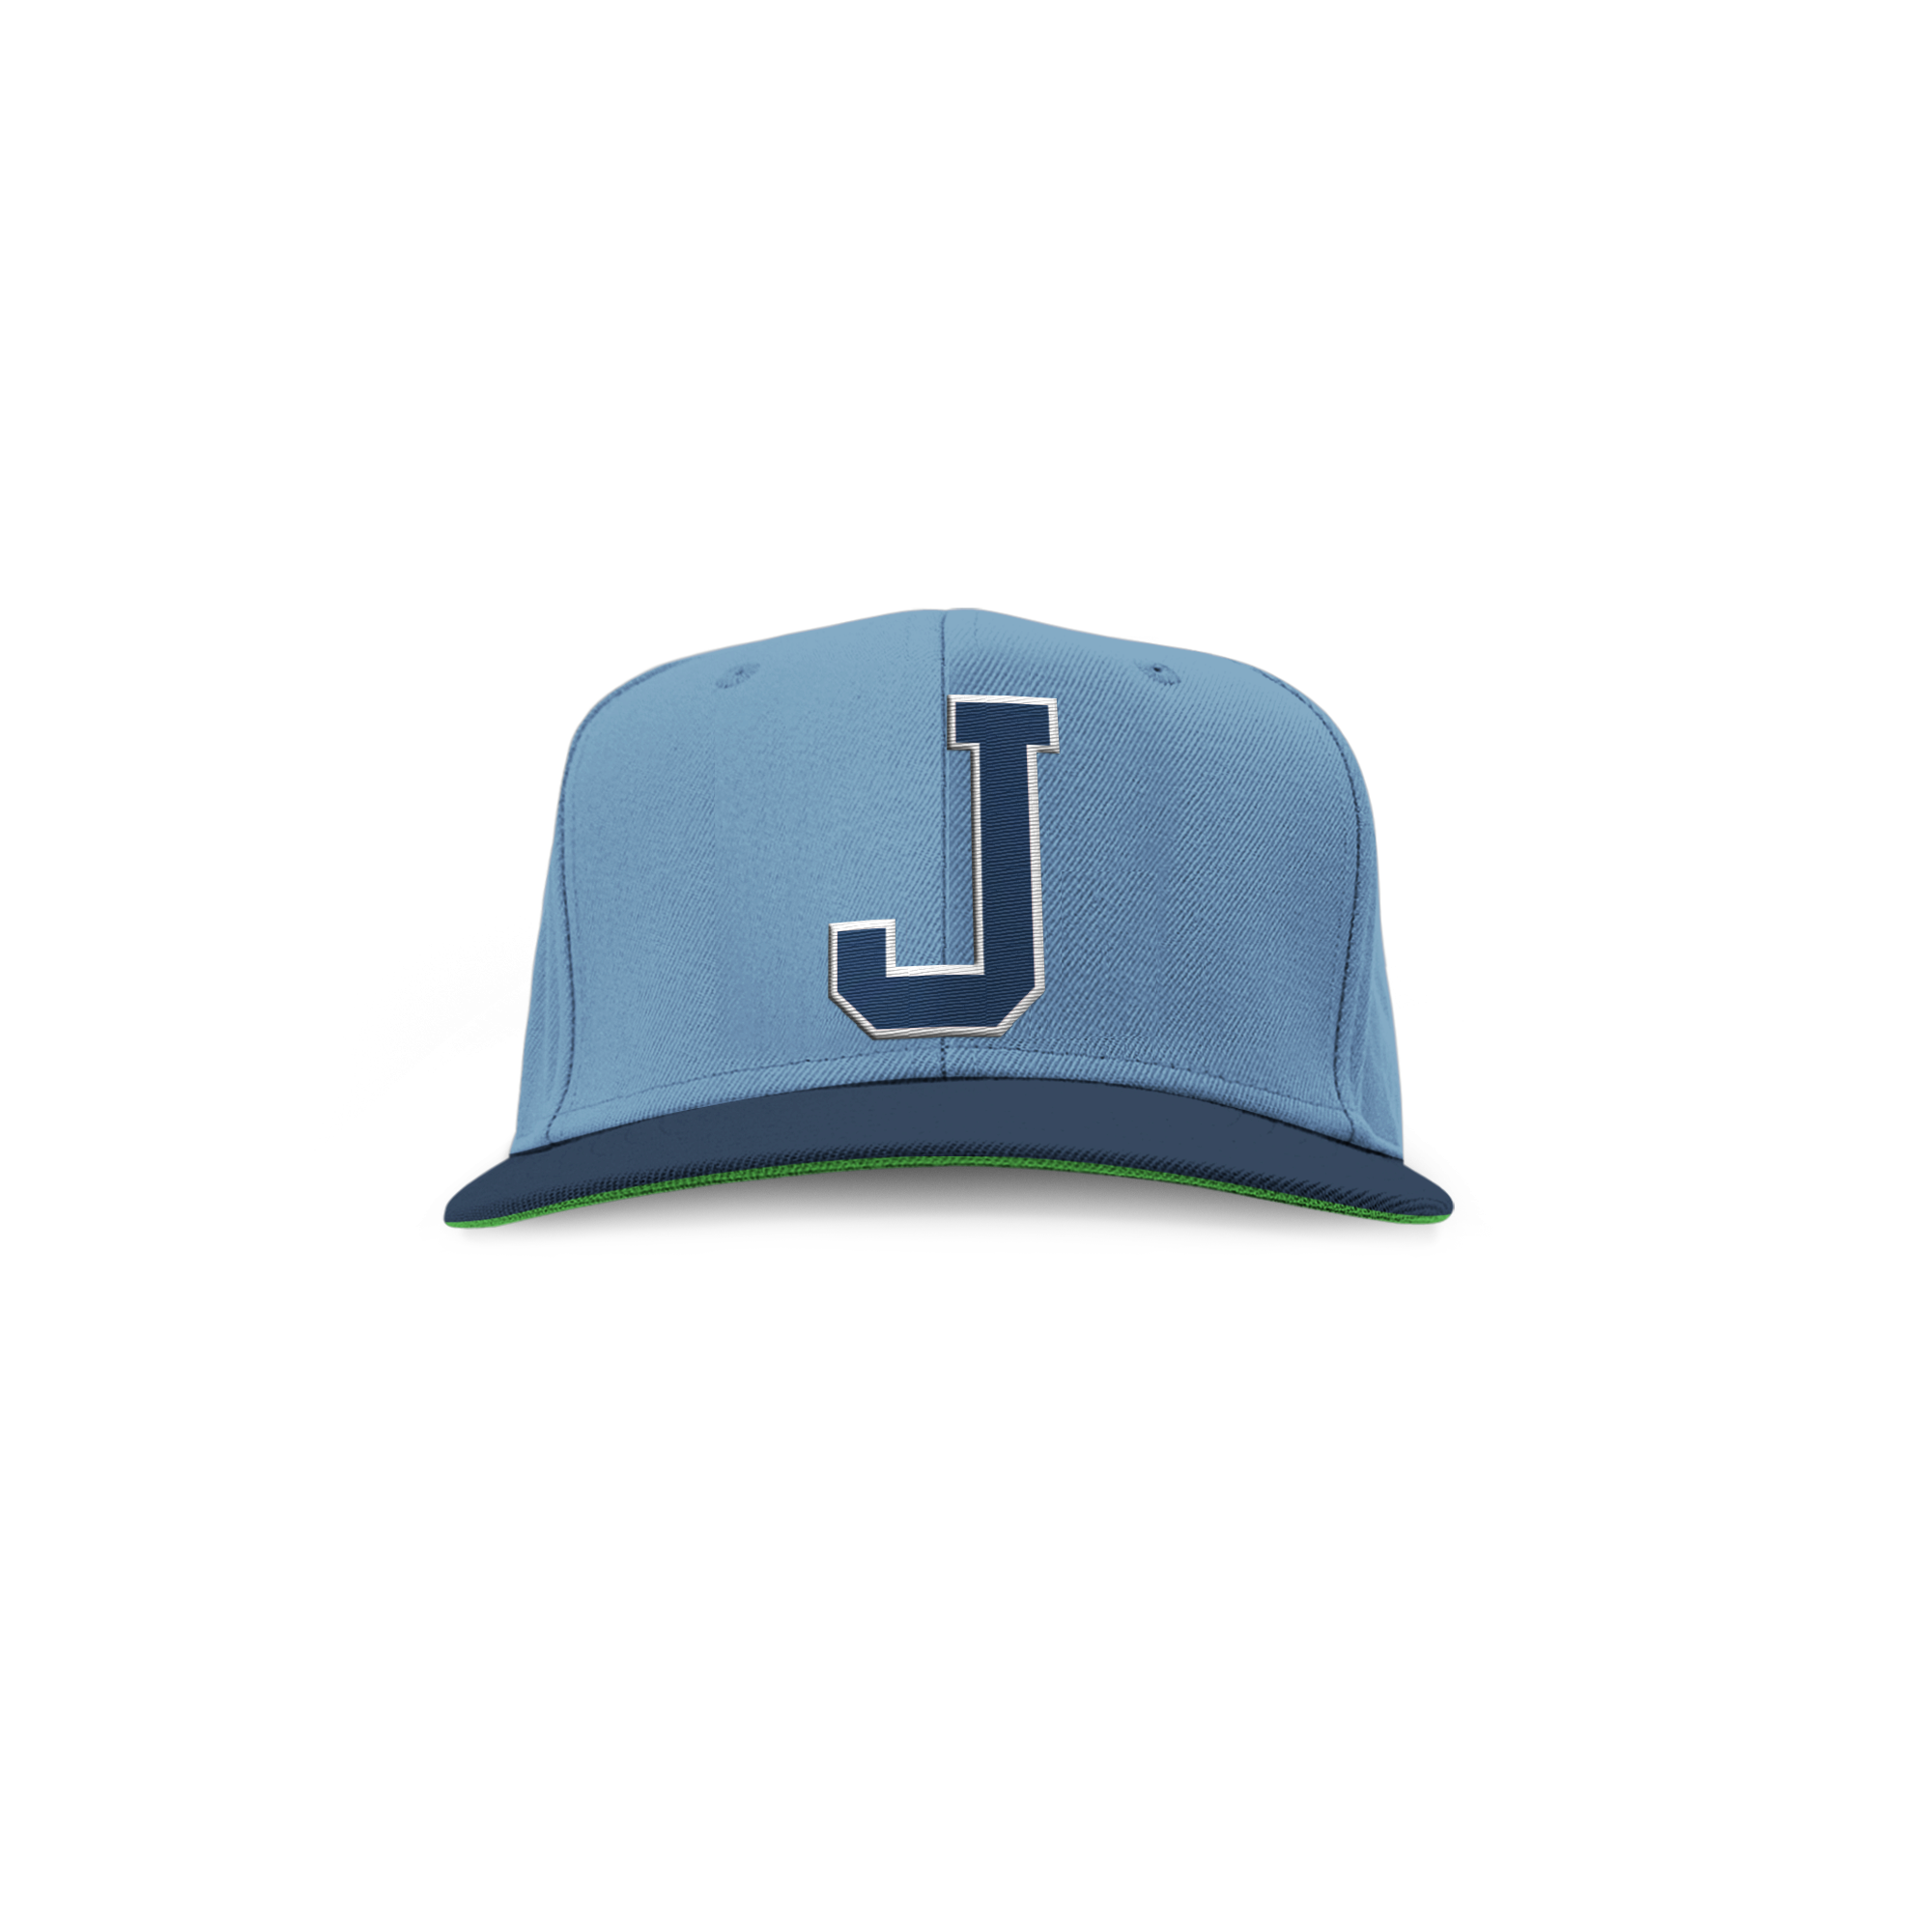 THEE "J" HAT